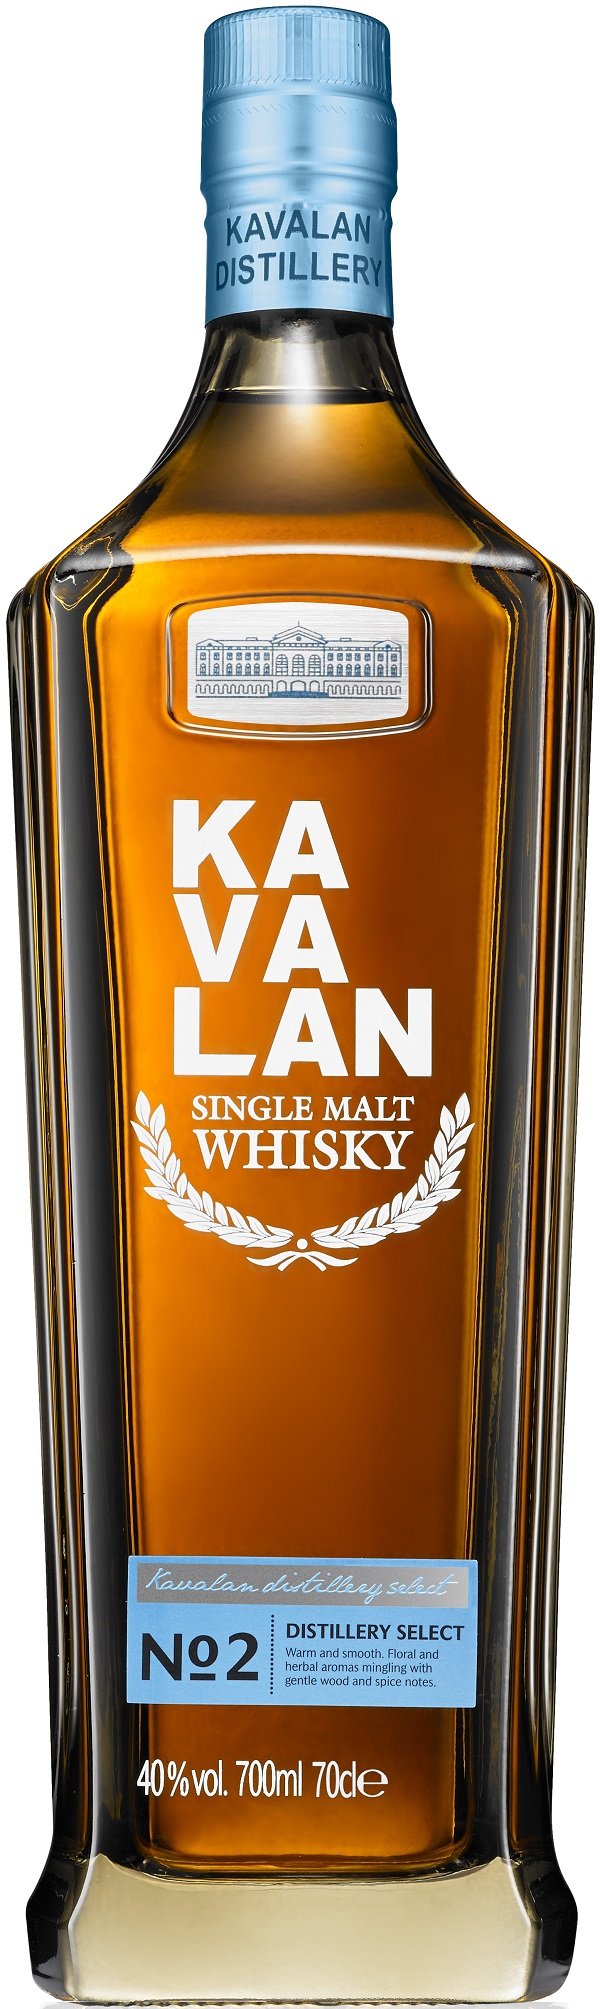 Distillery No.2 Select Kavalan Kavalan Single